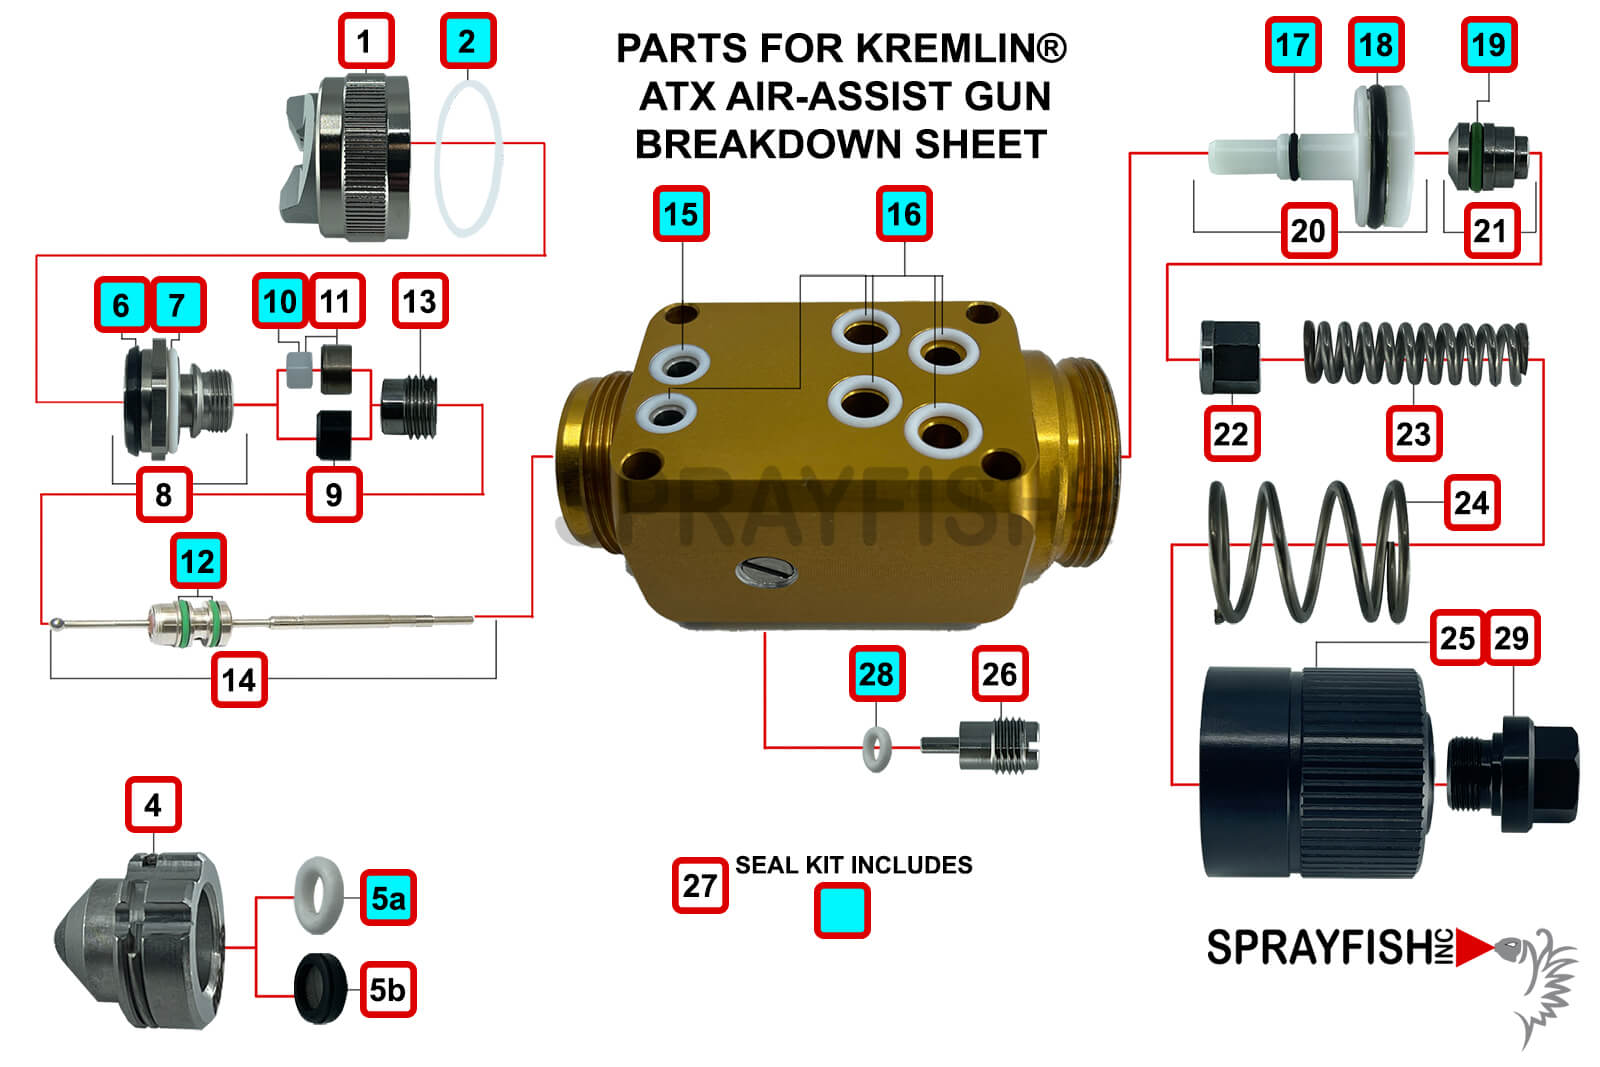 Sprayfish Non-OEM Parts Breakdown Kremlin® AVX Air-Assisted Airless Automatic Spray Gun